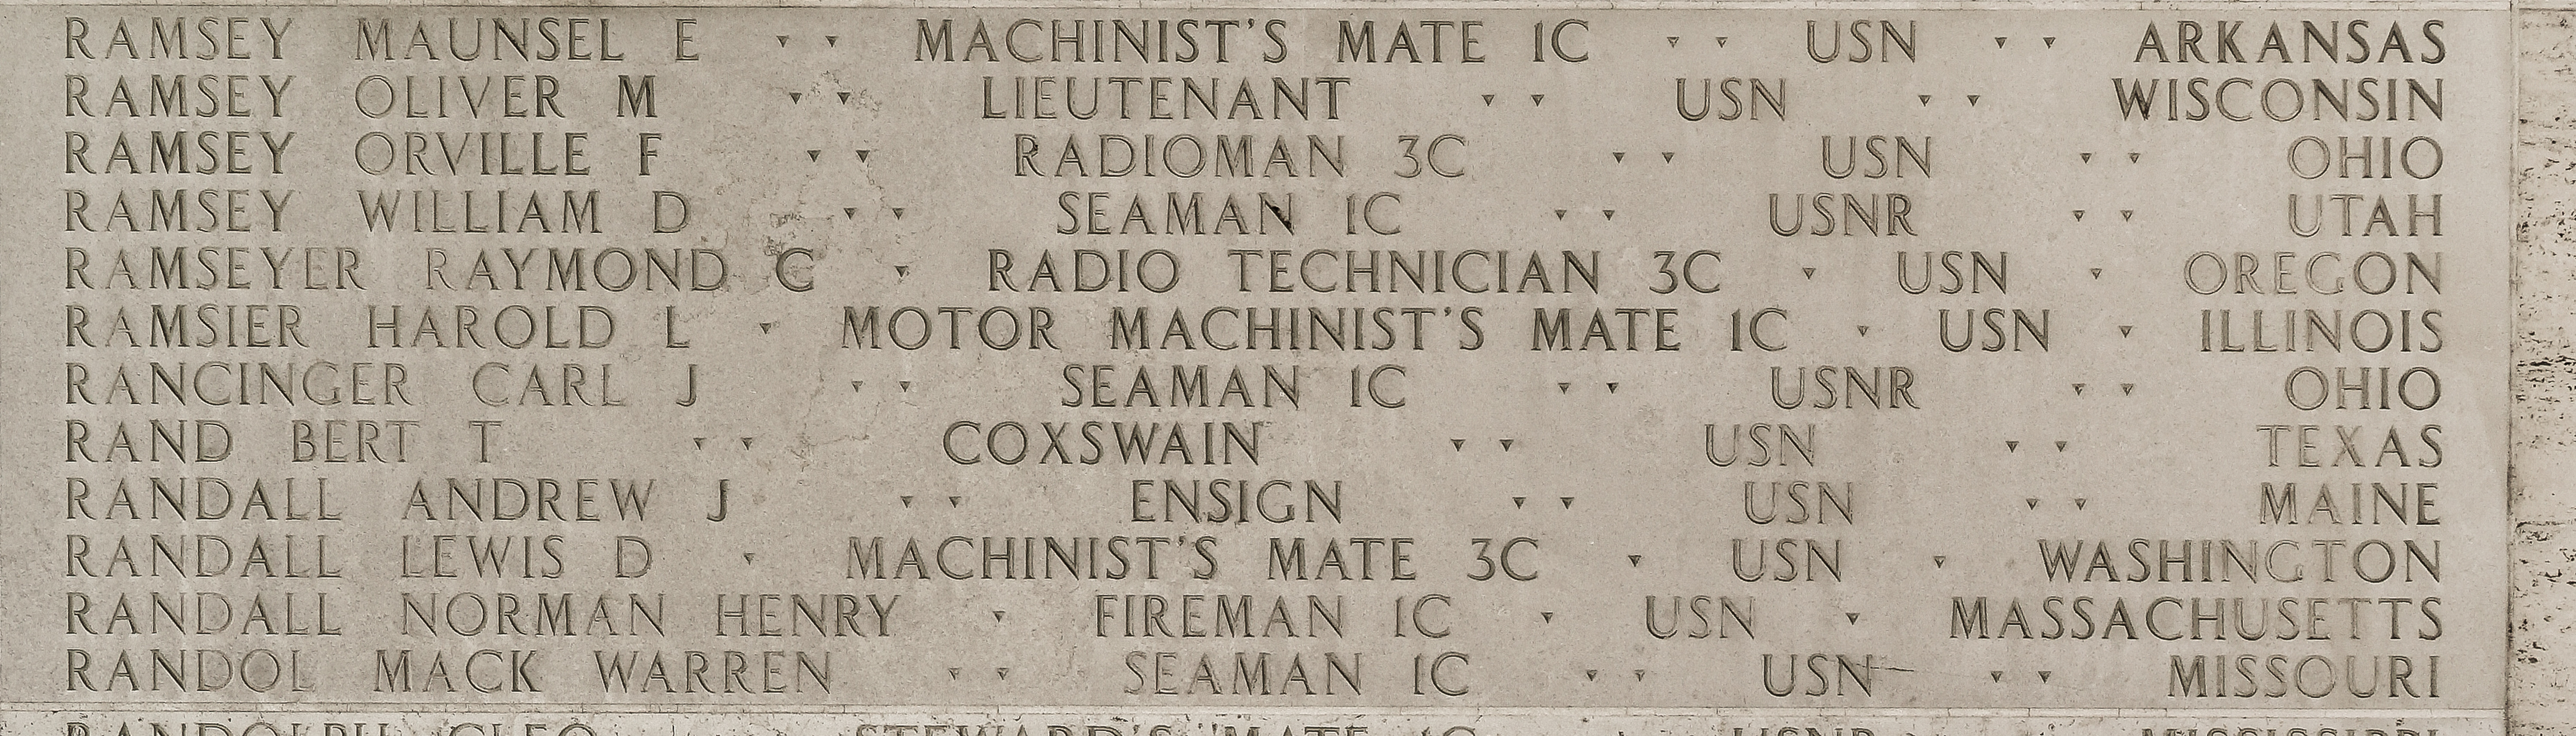 Raymond C. Ramseyer, Radio Technician Third Class